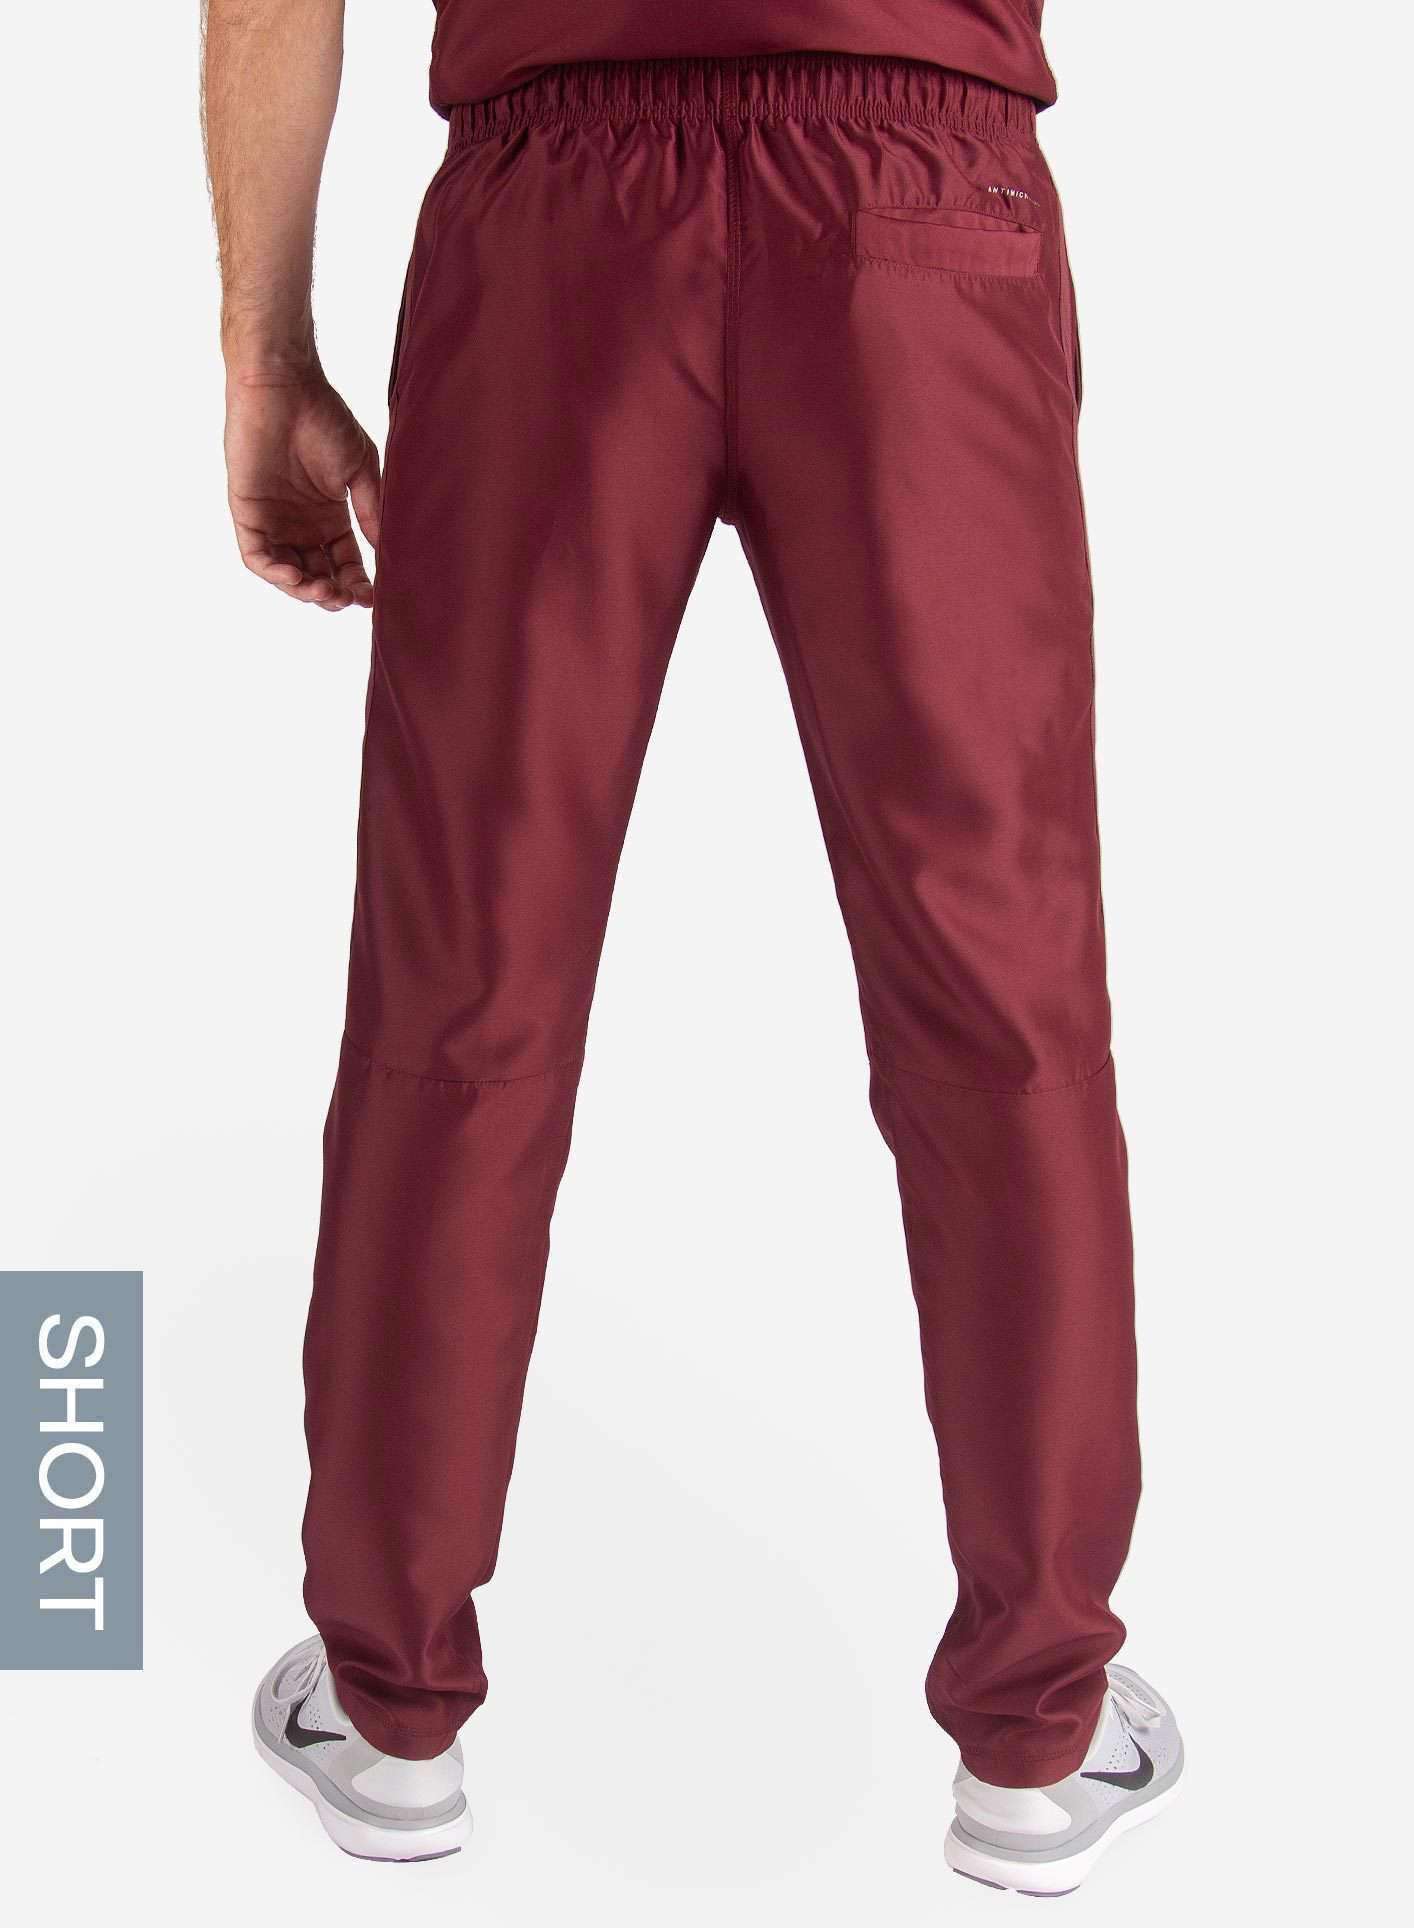 Men's Short Slim Fit Scrub Pants in Bold burgundy